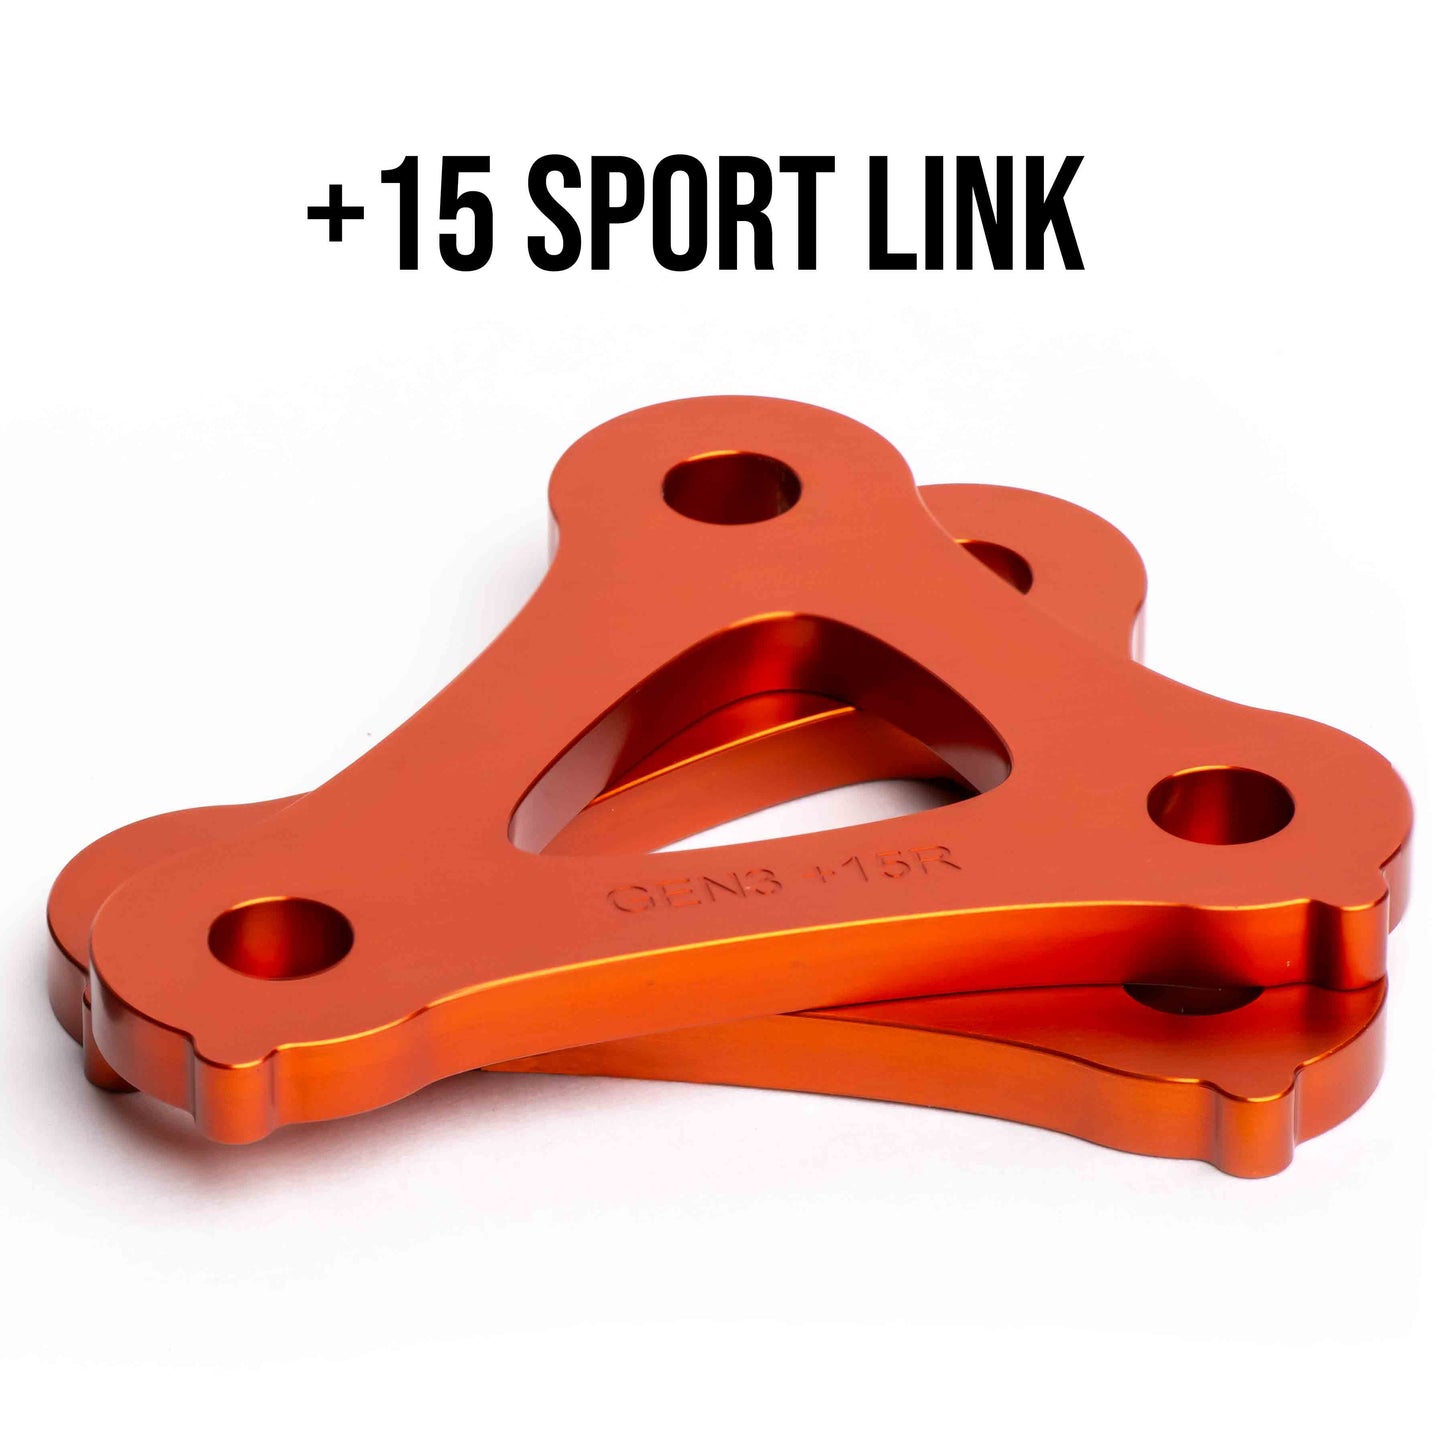 SPORT LINK +15 - Suspension links (pair) adding 15mm ride height for KTM 1290 Super Duke R,RR, EVO Gen3